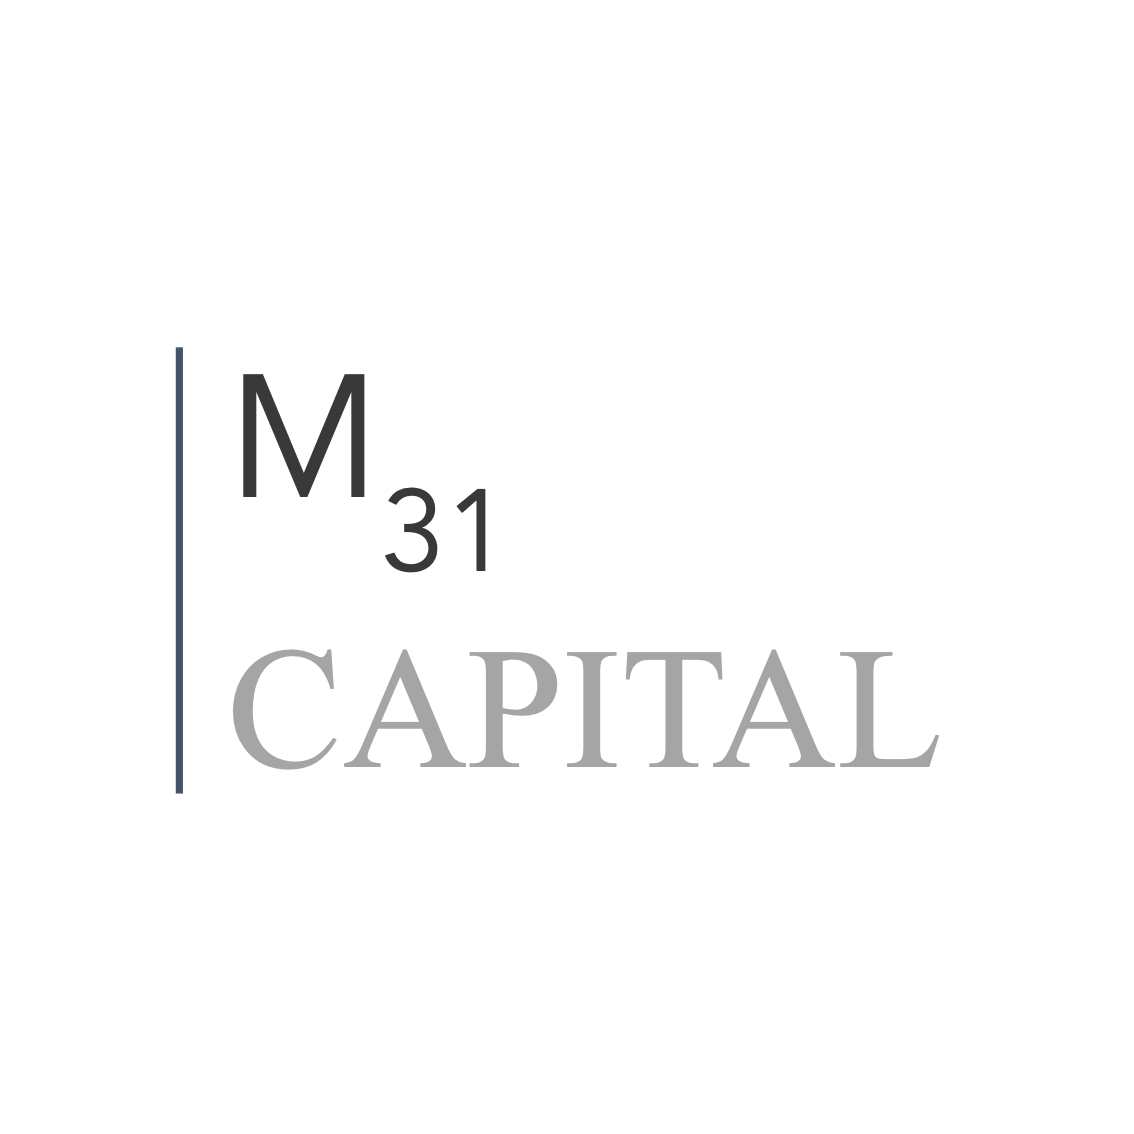 Artwork for M31 Capital